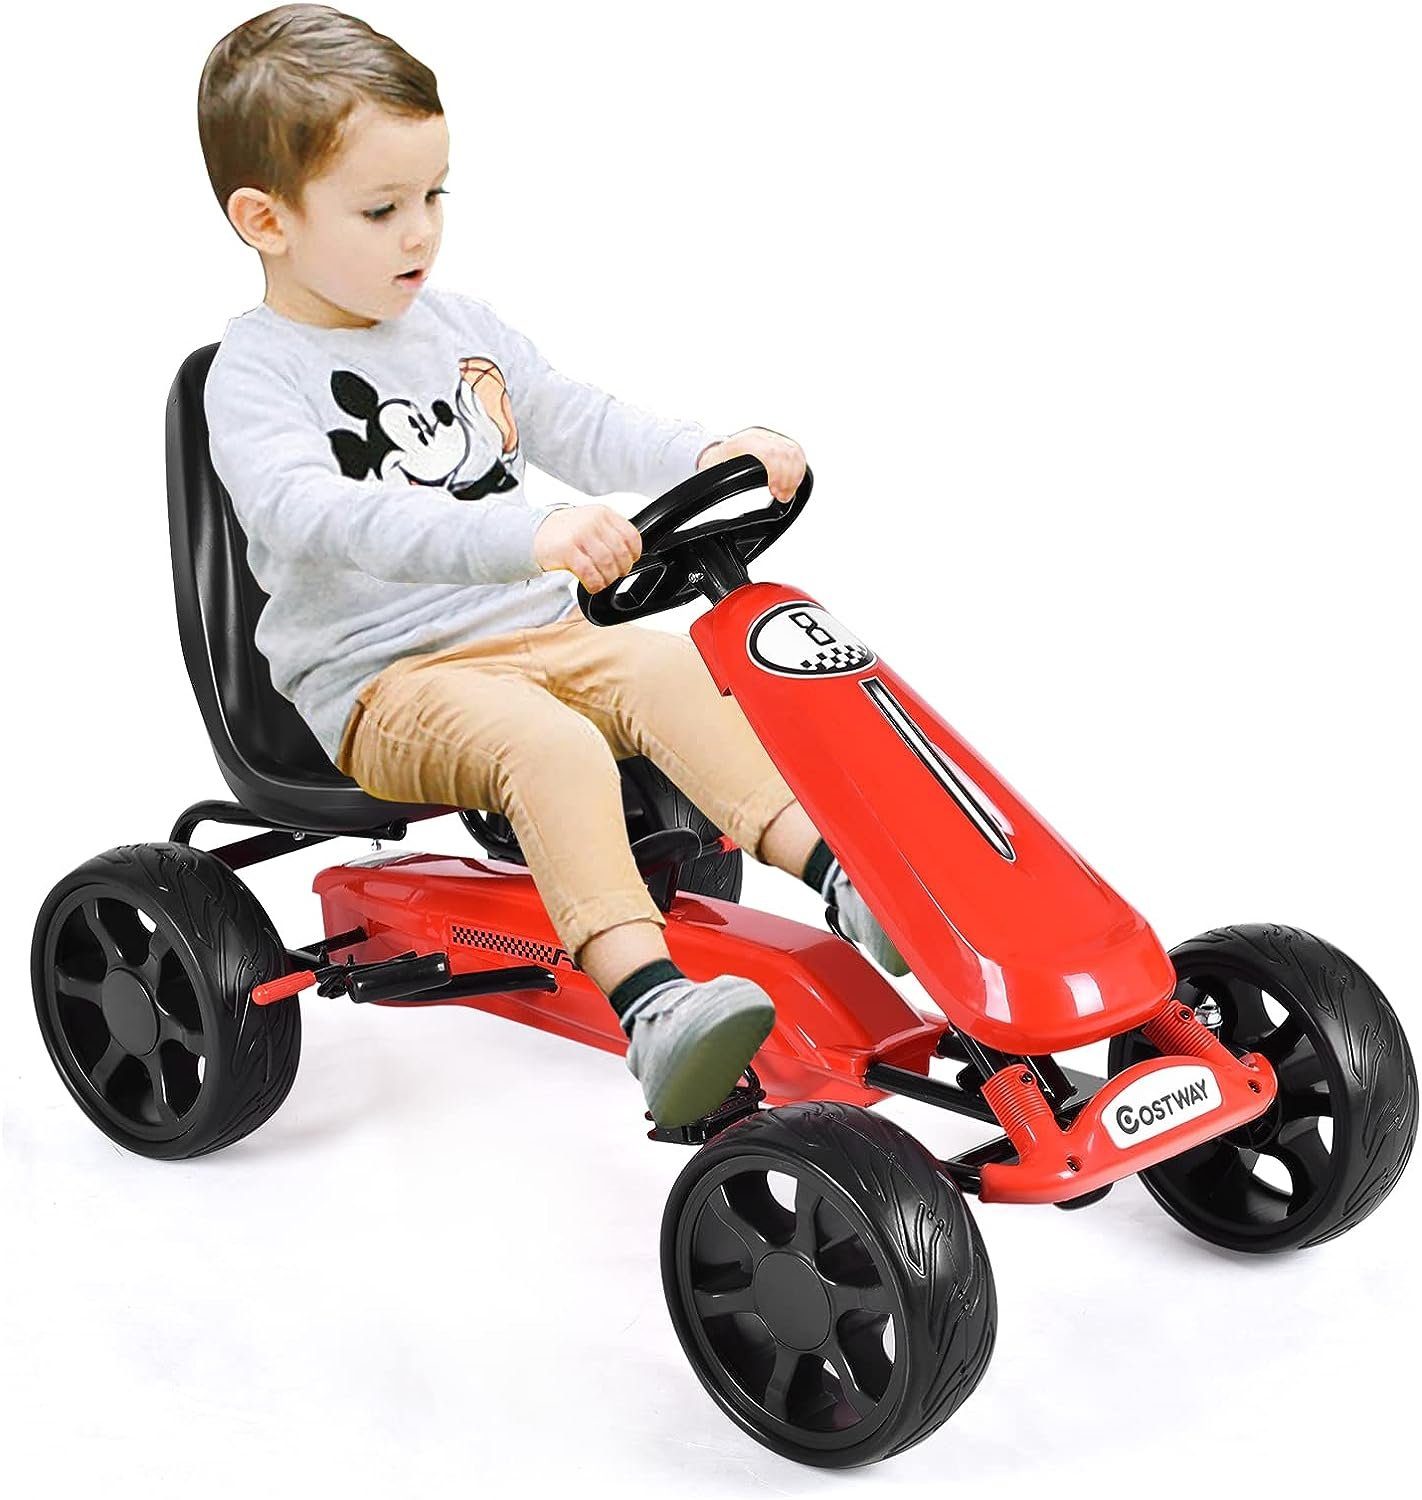 KOMFOTTEU Go-Kart Kinderfahrzeug, mit Verstellbarem Sitz, bis 30kg